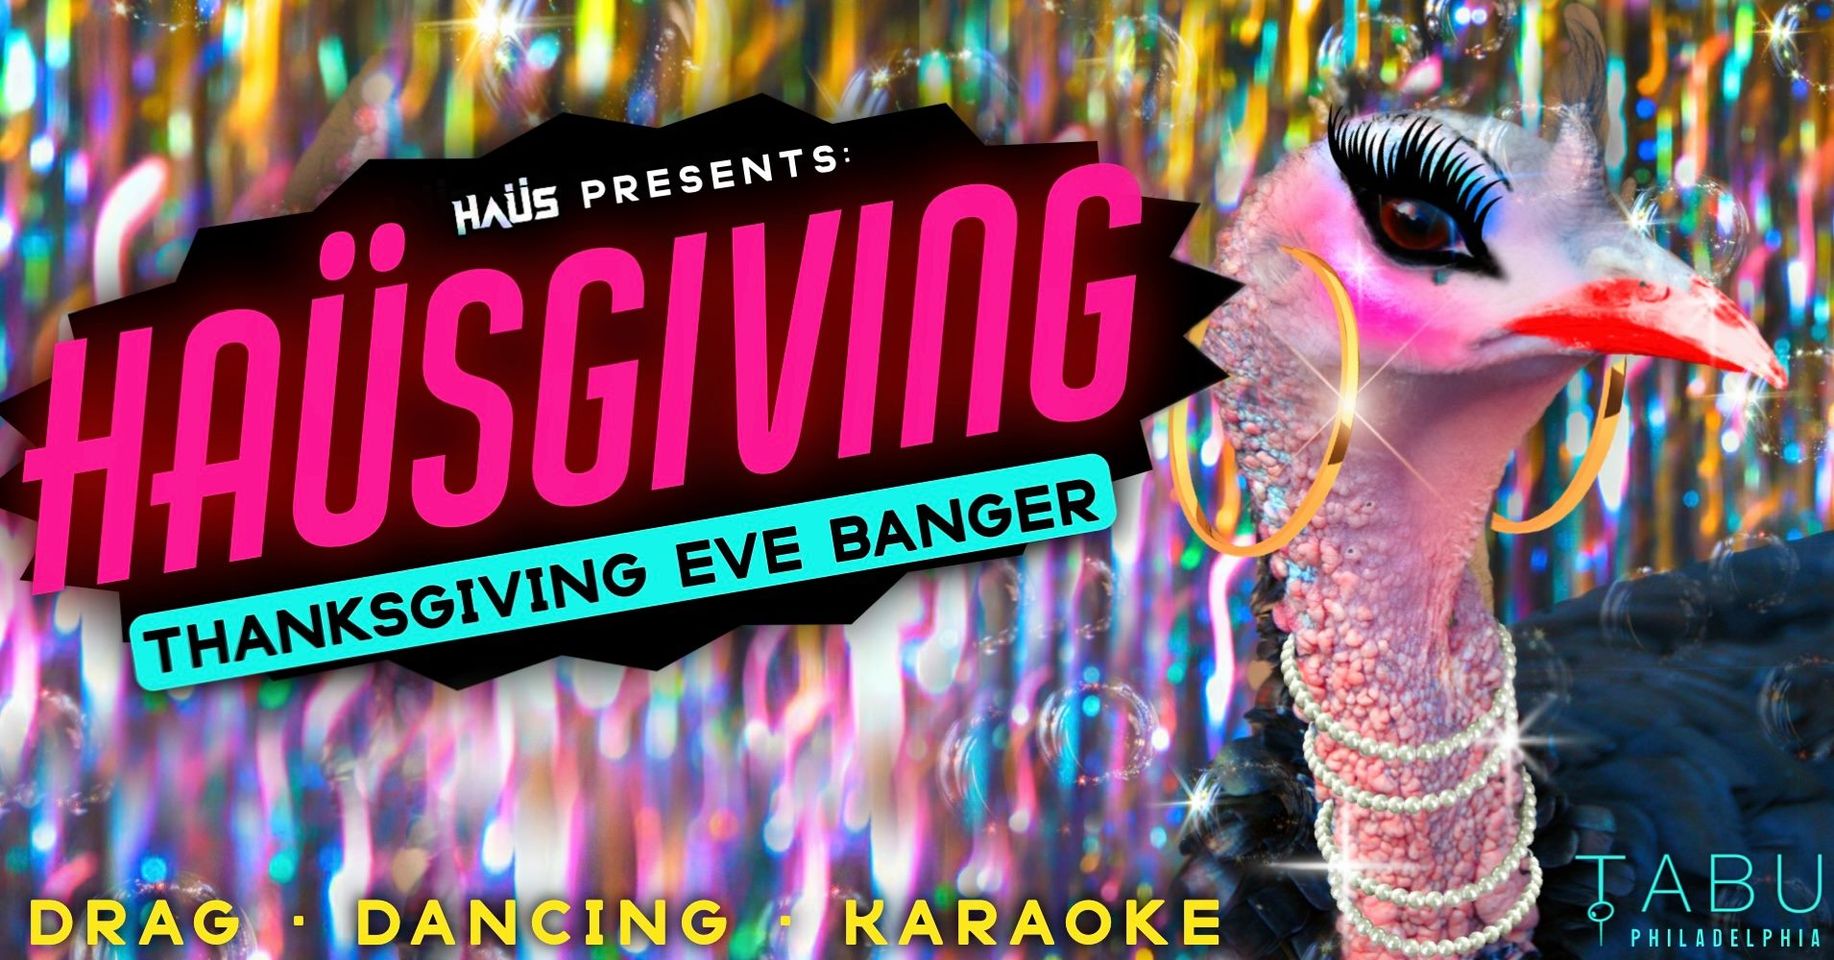 HAÜSGIVING (Thanksgiving Eve Banger)